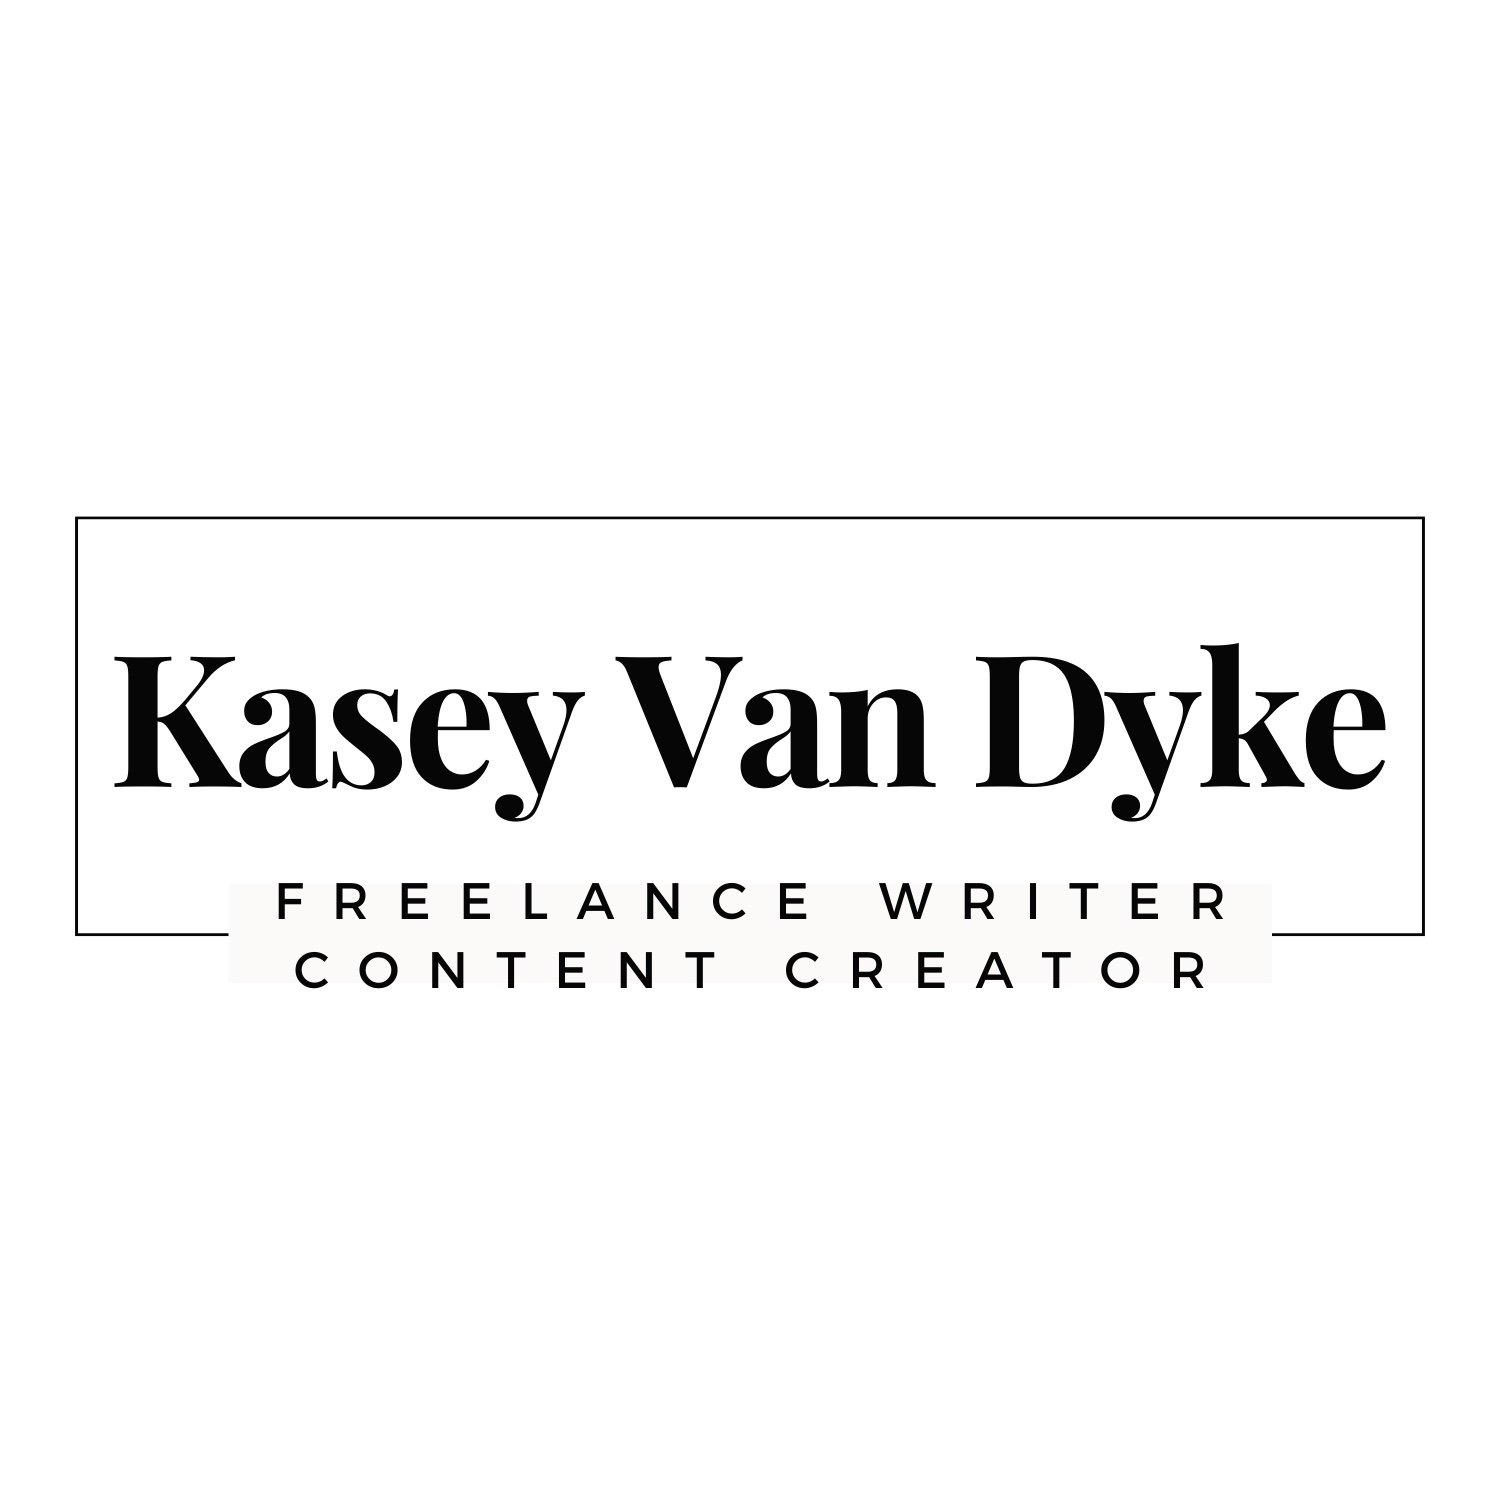 Kasey Van Dyke: A Portfolio